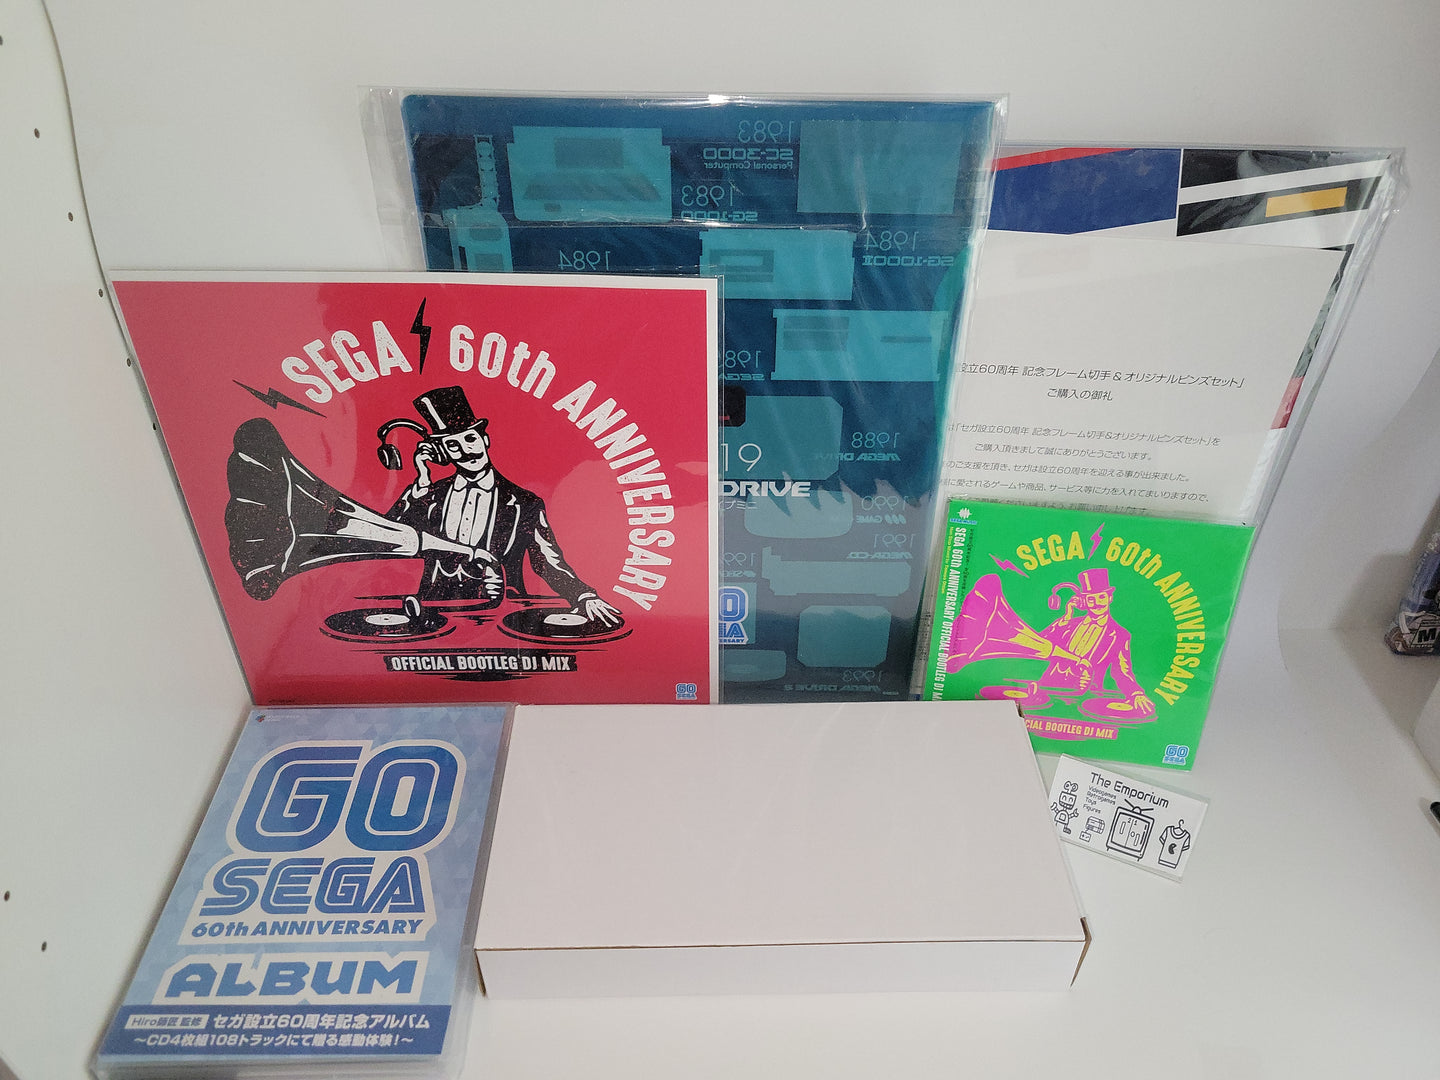 SEGA Sound Team GO SEGA 60th ANNIVERSARY soundtrack + extra soundtrack + stamps + pins frame limited edition complete set - Music cd soundtrack